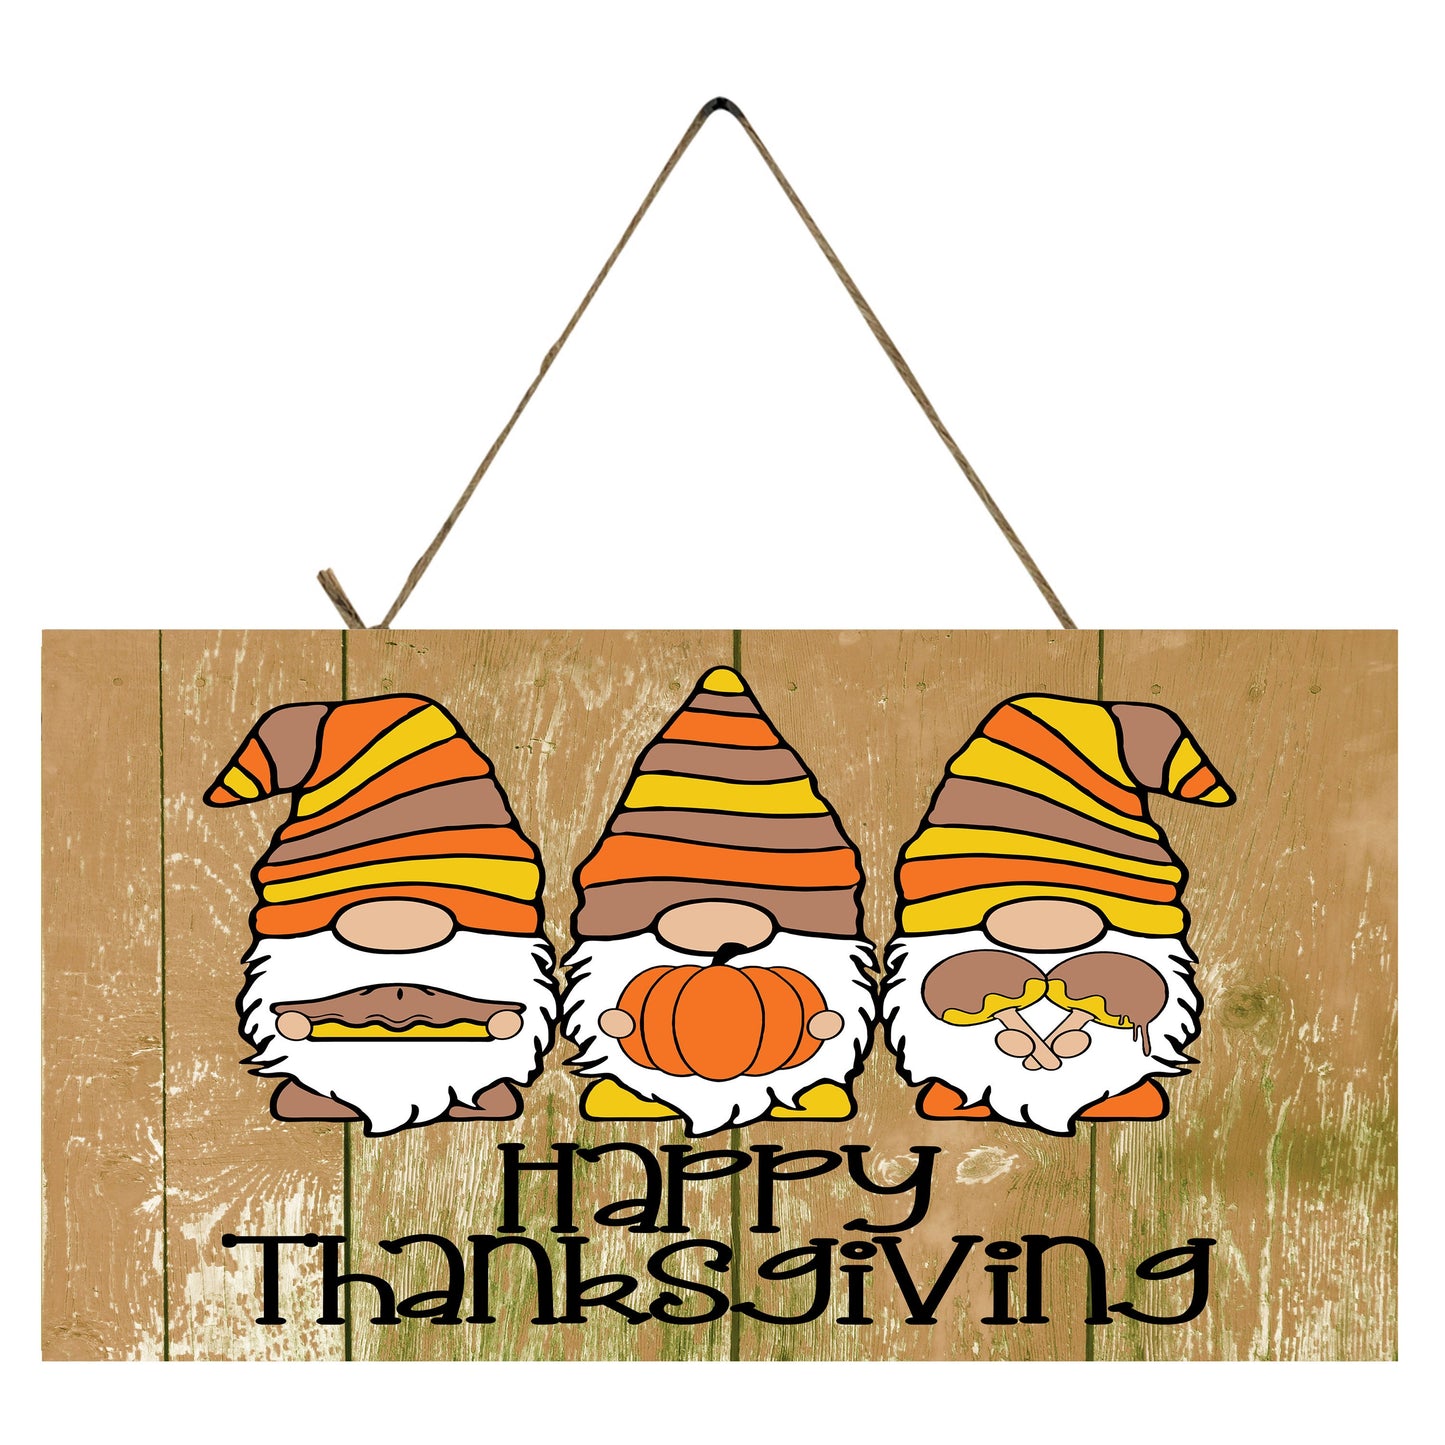 Happy Thanksgivingc Gnomes Printed Handmade Wood Sign